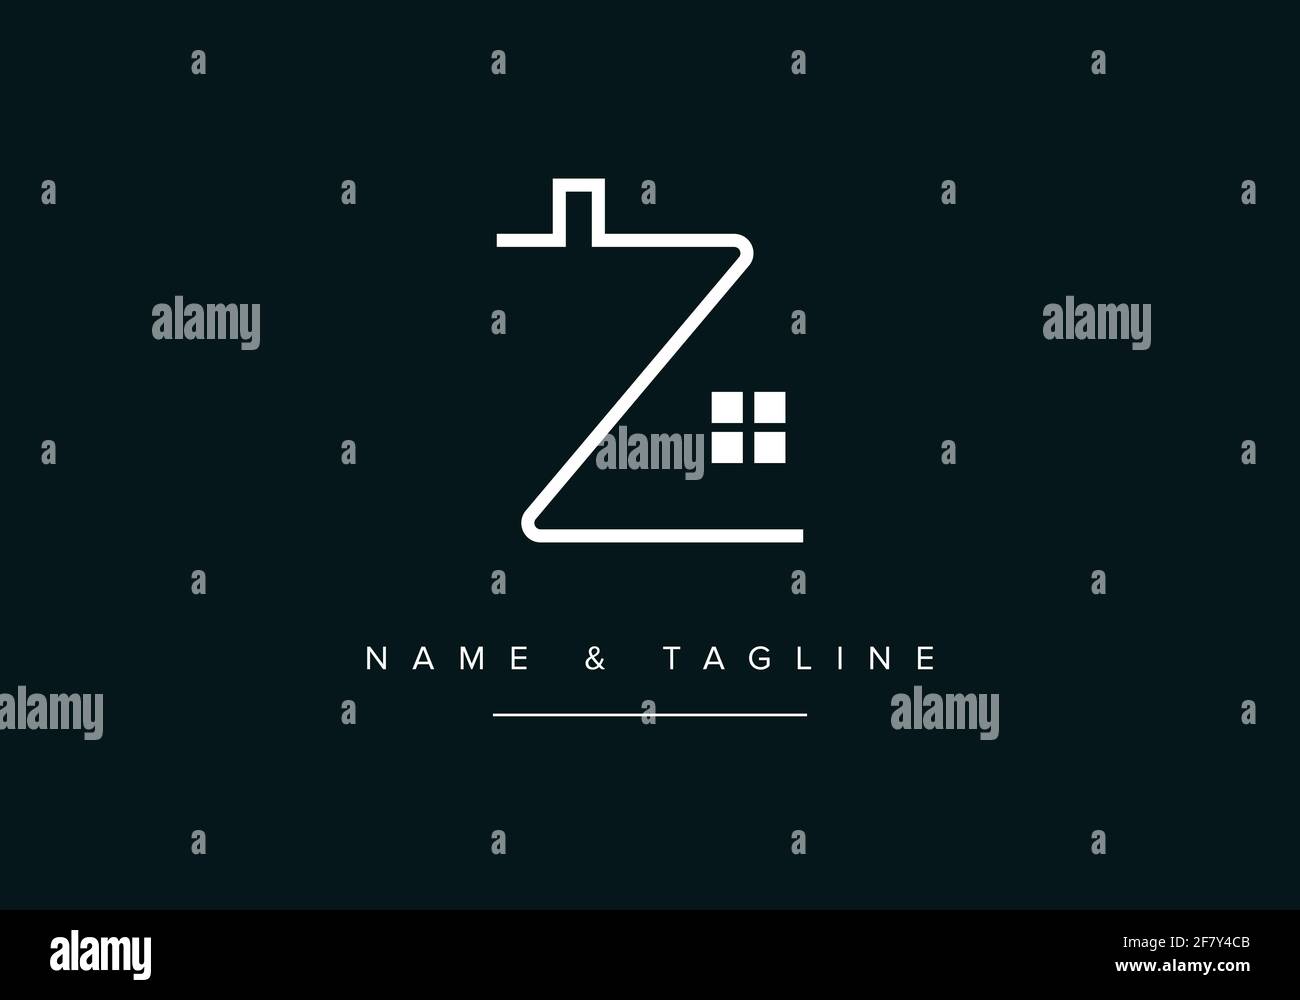 Z alphabet logo with real estate home or house concept Stock Vector